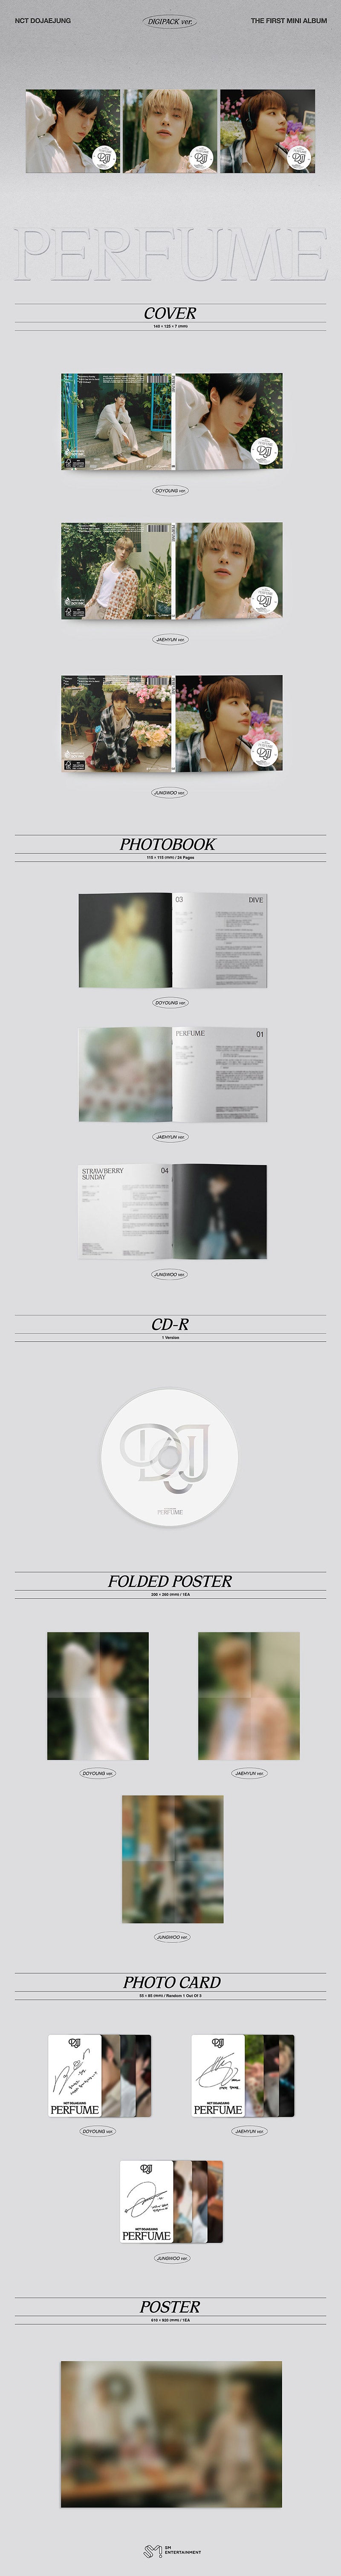 NCT DOJAEJUNG - 1st mini Album [Perfume] DIGIPACK Ver.